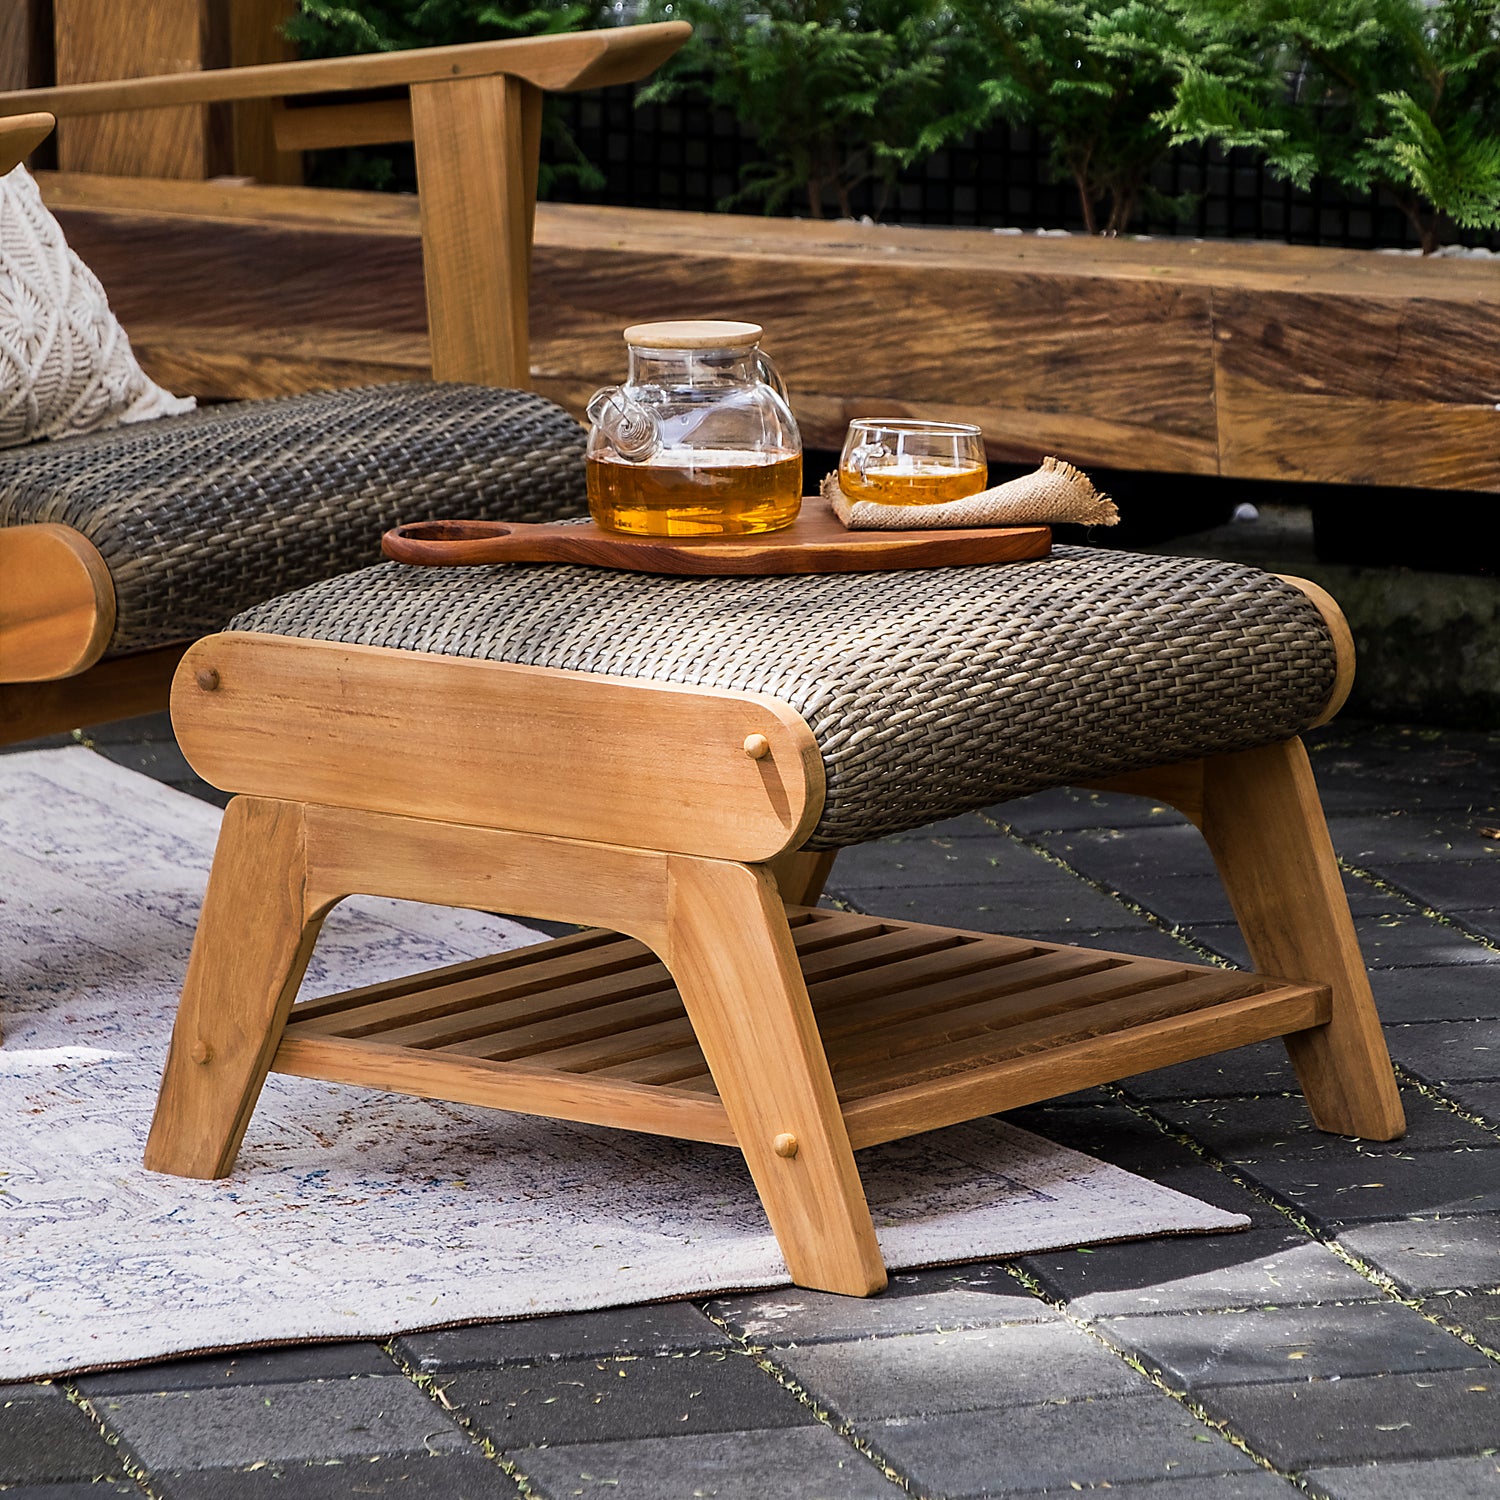 Auburn Upholstered Teak Wood 5 Piece Patio Conversation Set